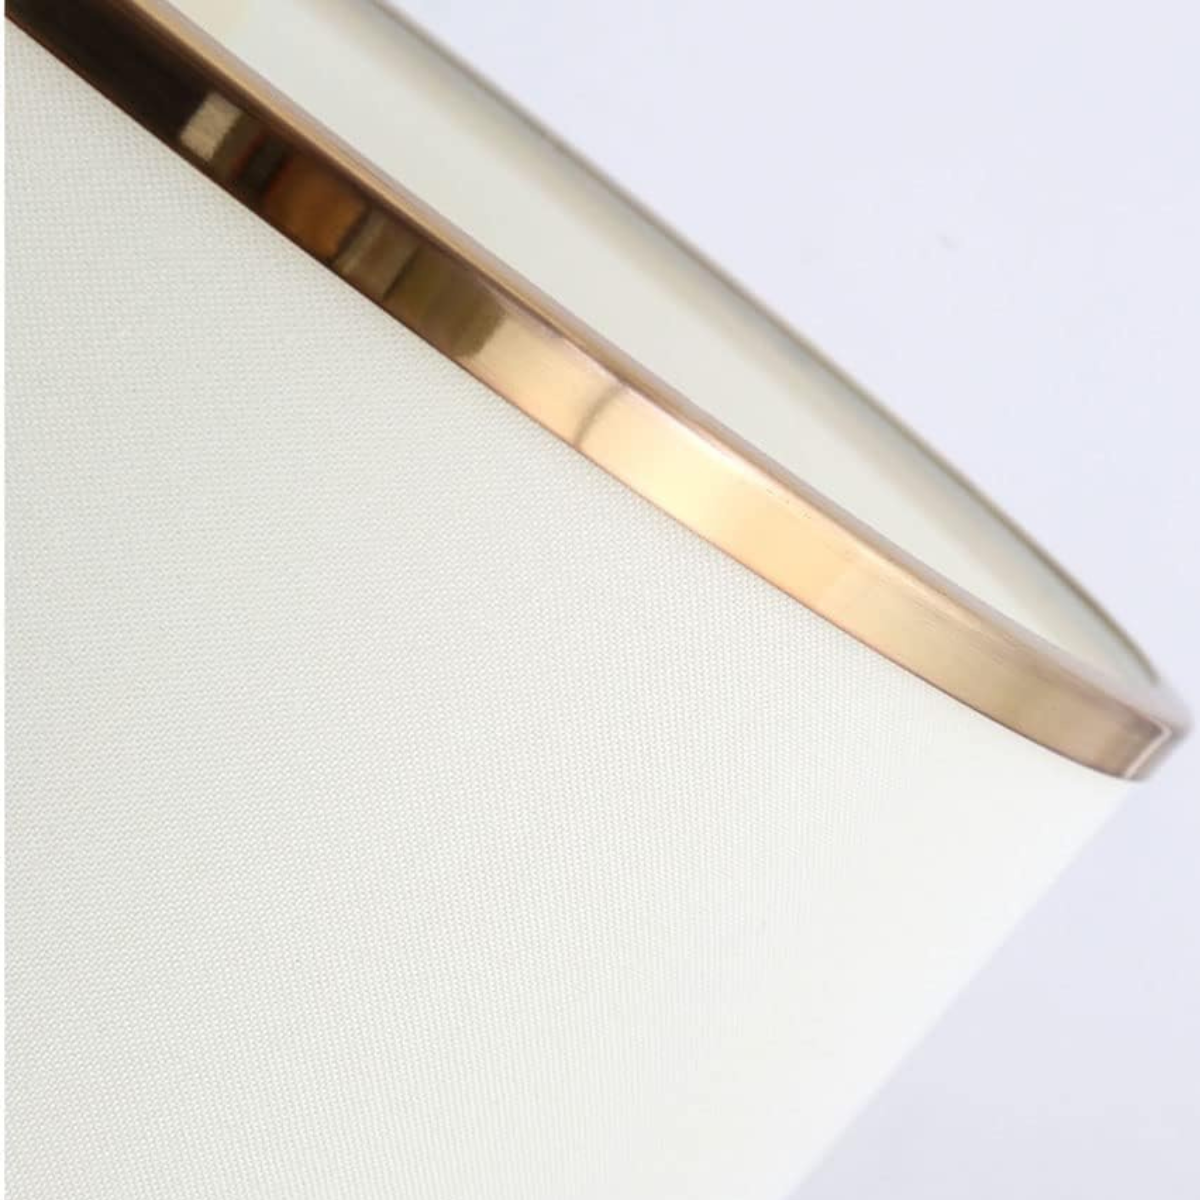 Aura-Metal-Based-Bedside-Table-Lamp-3